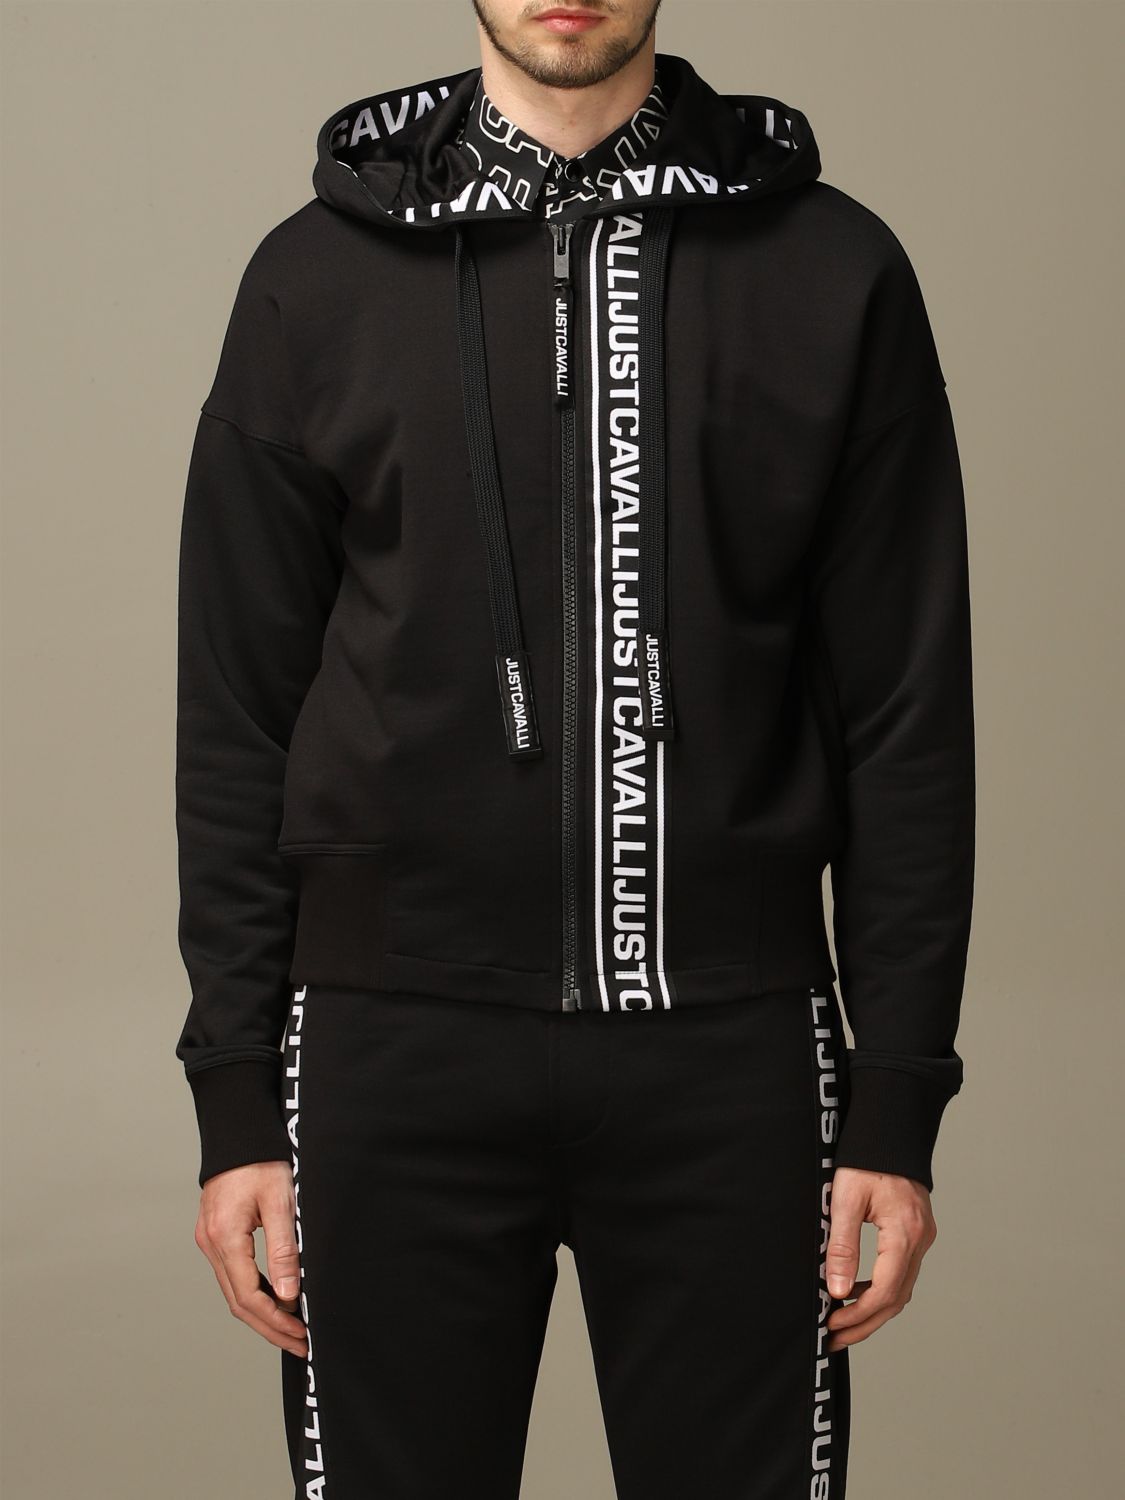 Vertrek naar St Arrangement Just Cavalli Outlet: sweatshirt with hood and logo - Black | Just Cavalli  sweatshirt S01HG0044 N25199 online on GIGLIO.COM